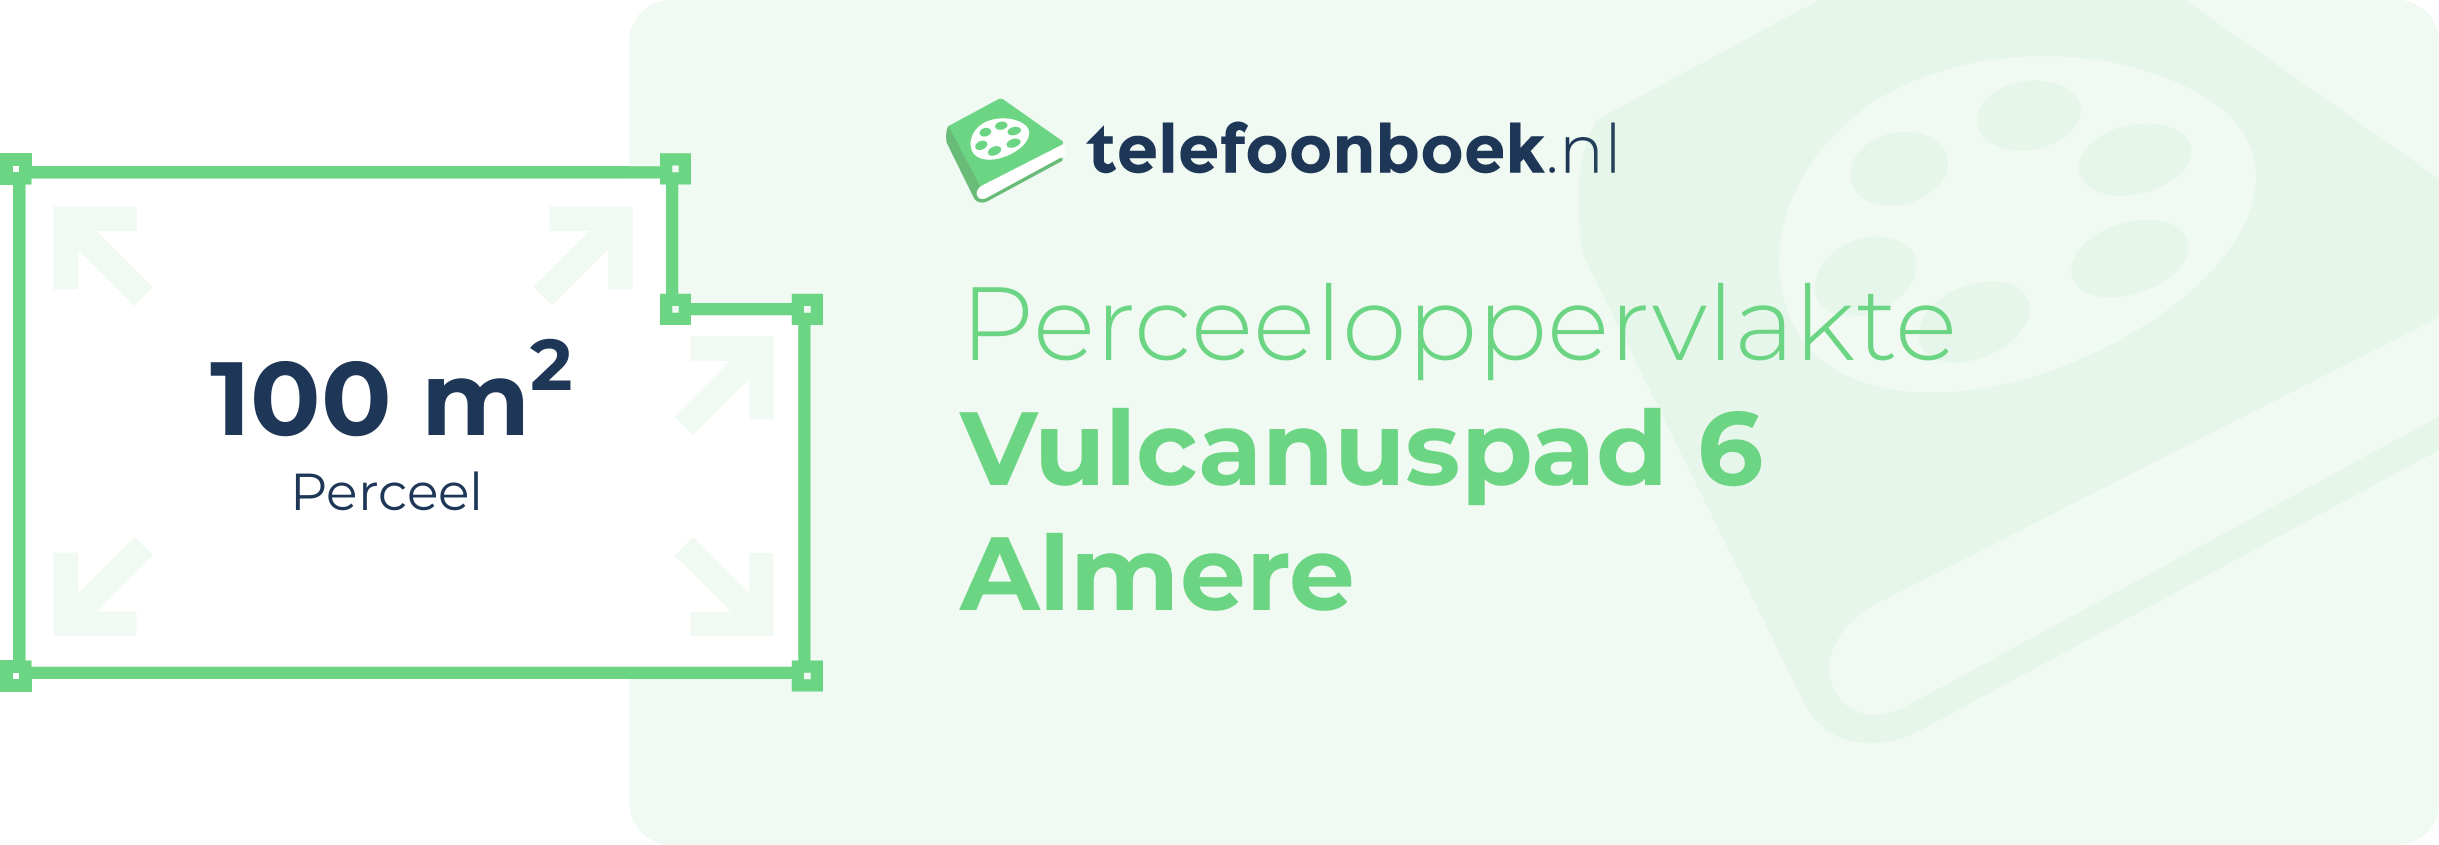 Perceeloppervlakte Vulcanuspad 6 Almere